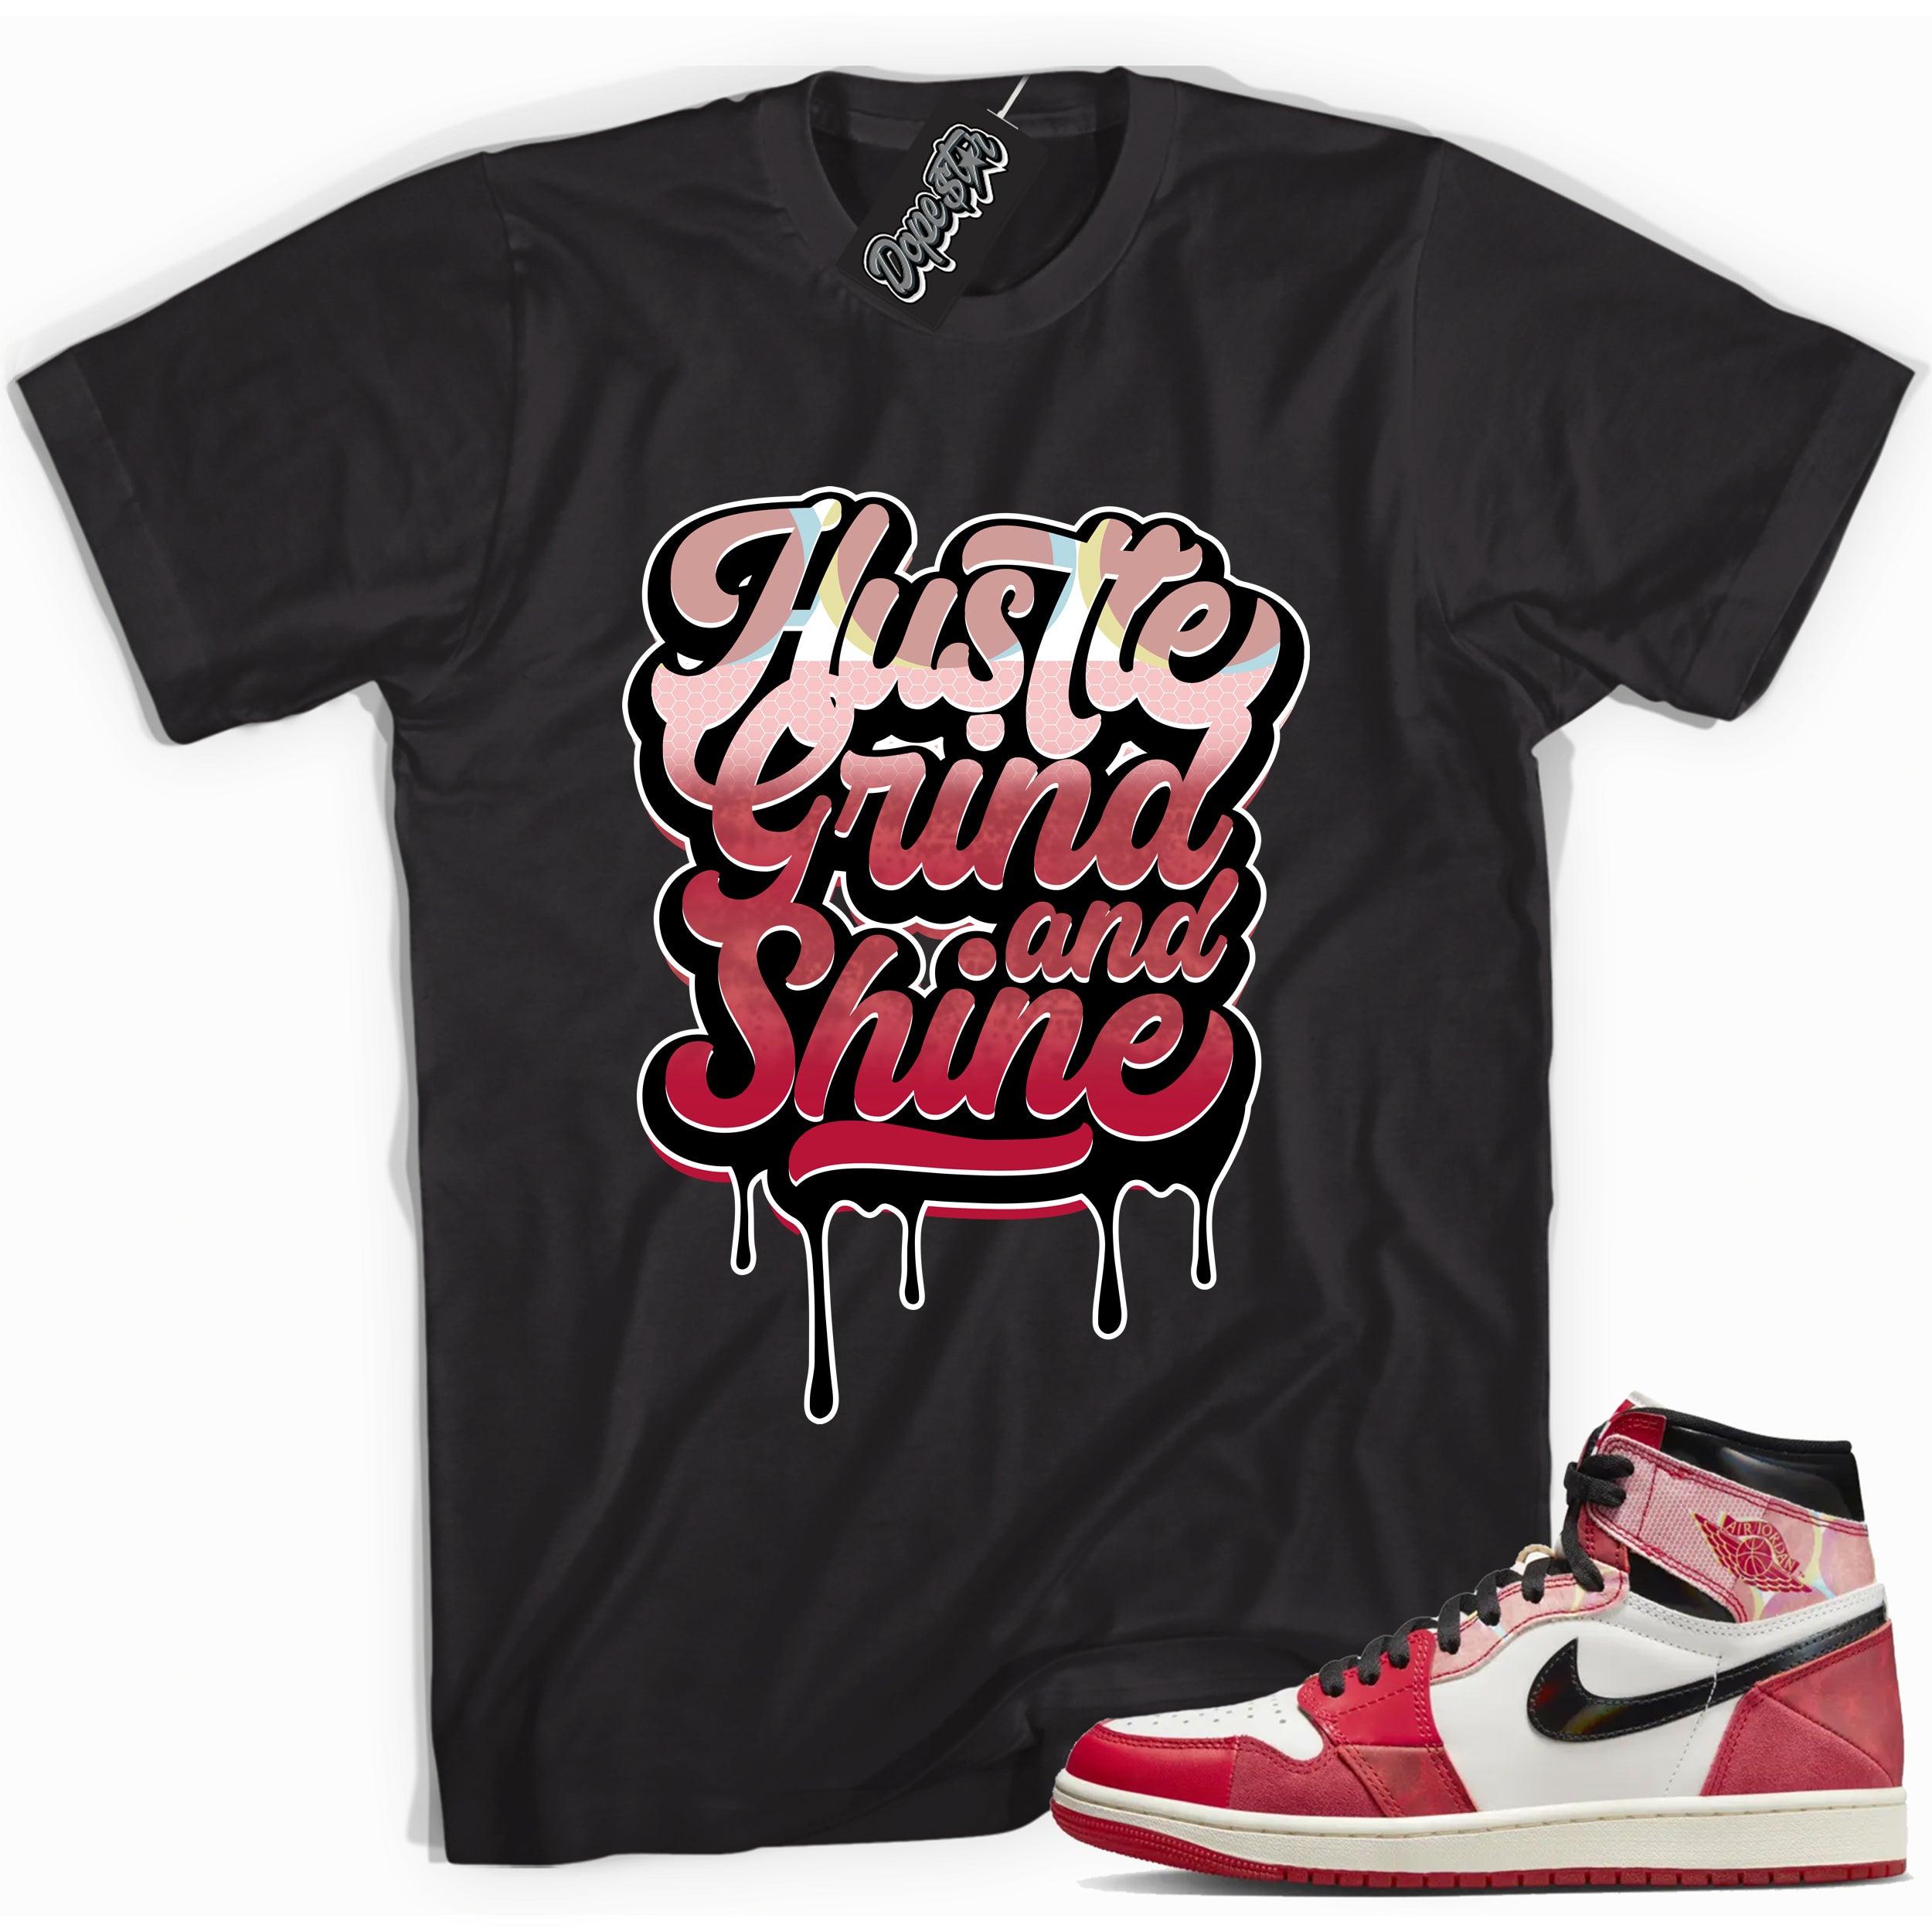 AIR JORDAN 1 SPIDER-VERSE Shirt - Hustle Grind And Shine - Sneaker Shirts Outlet